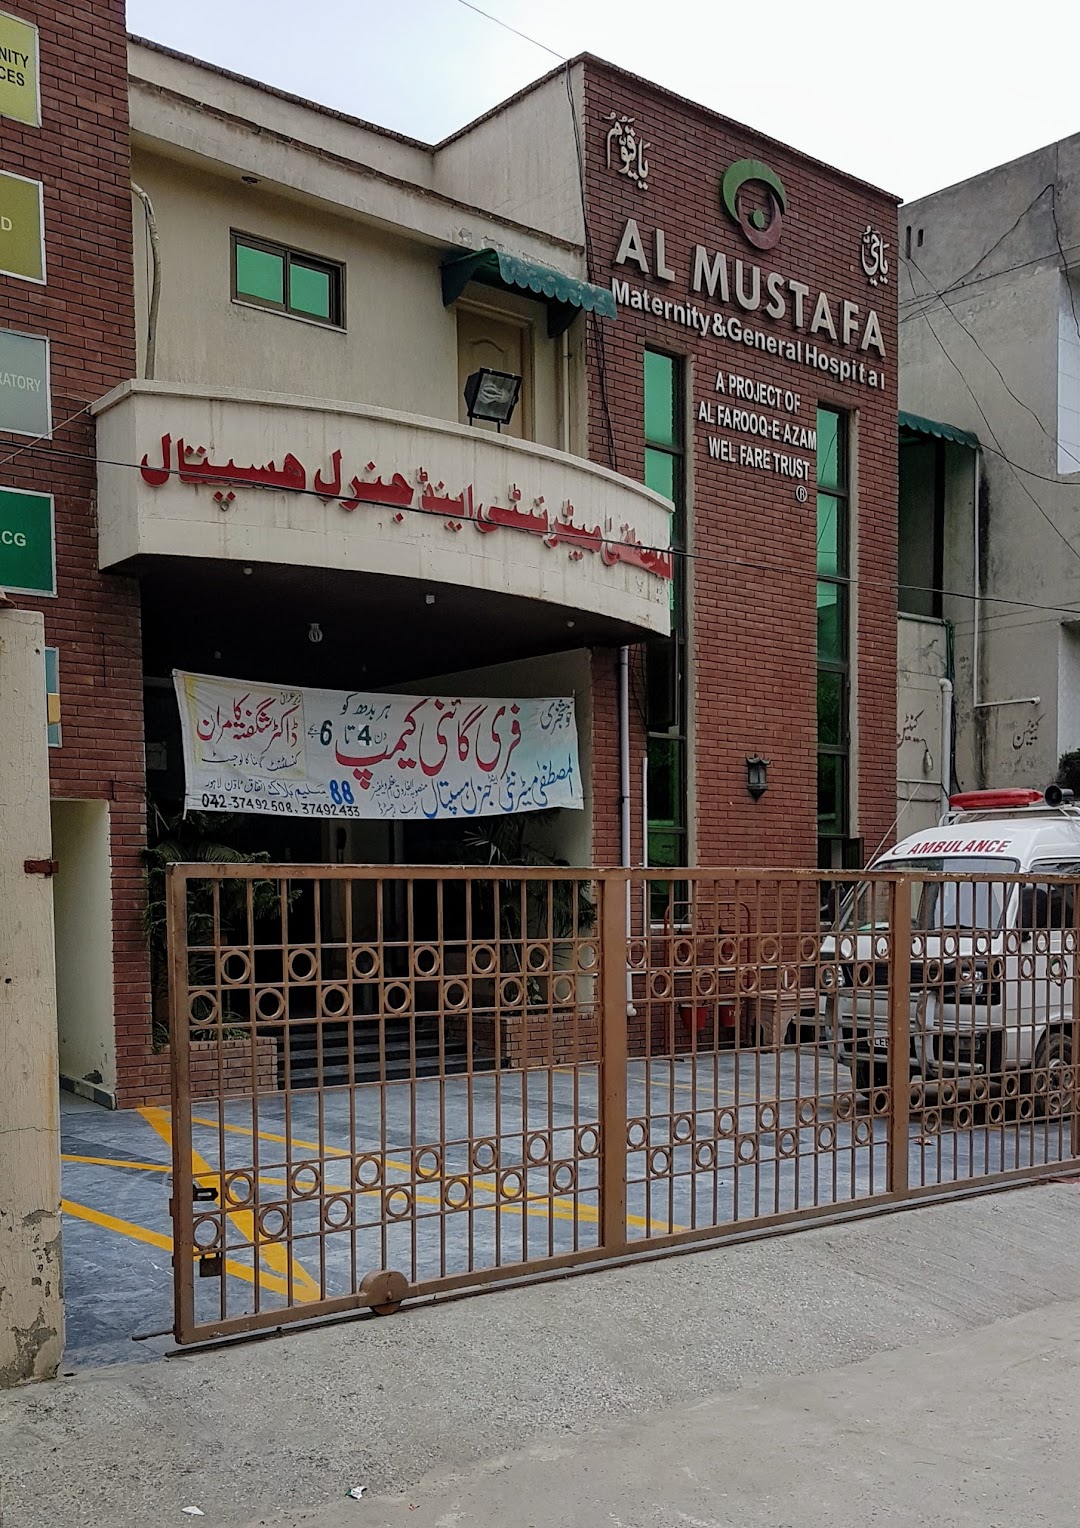 Al Mustafa Maternity & General Hospital